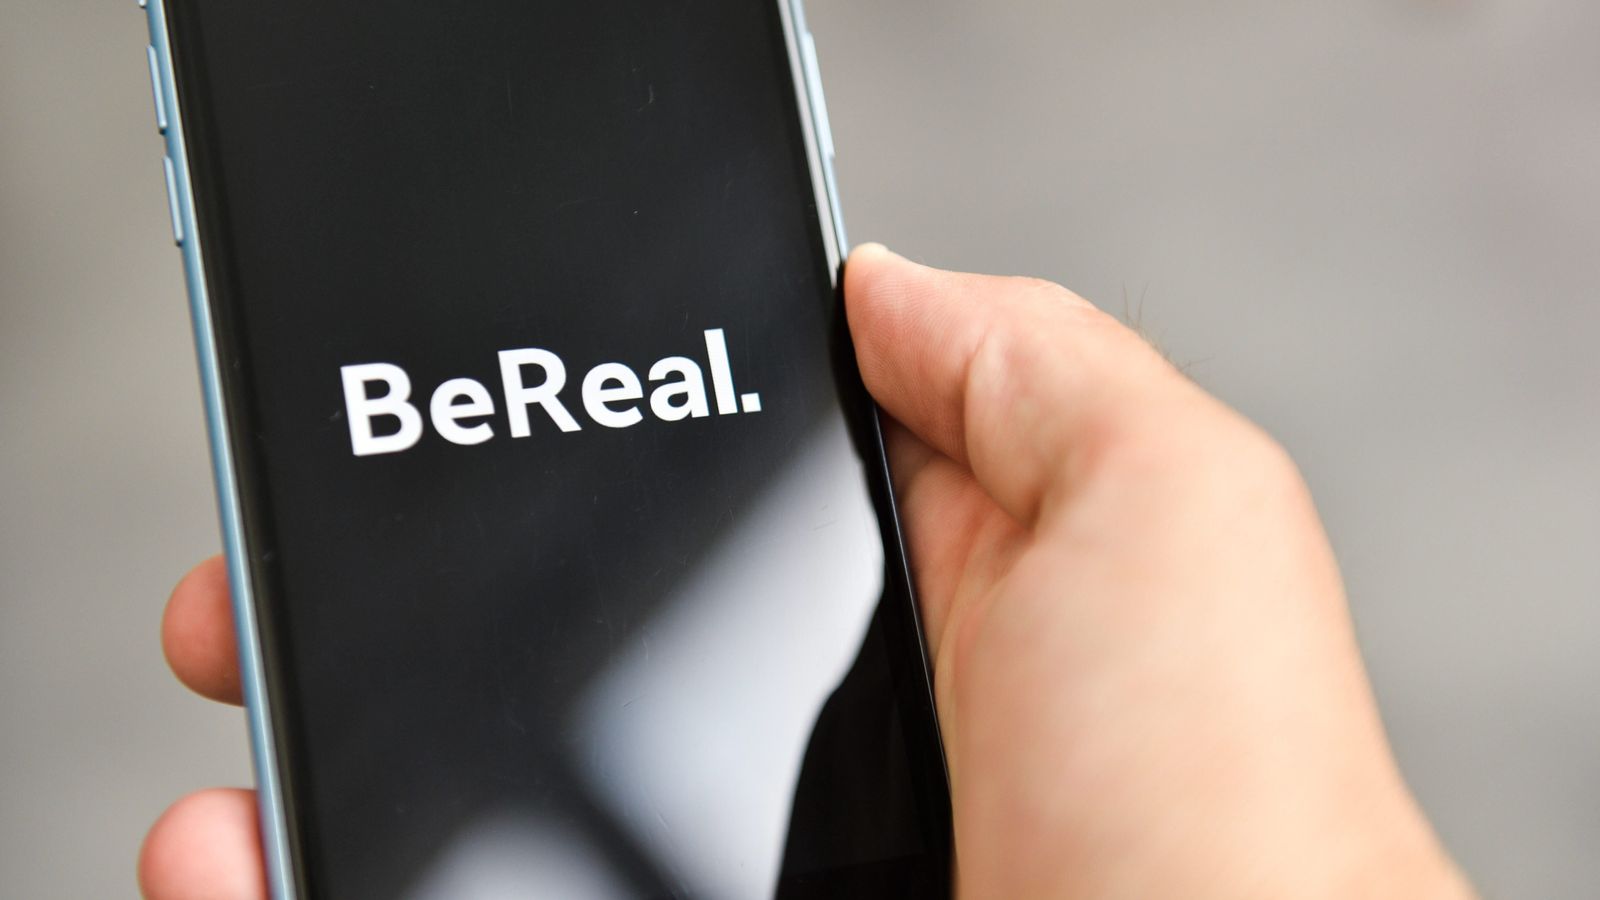 New social media app BeReal wants to show real life